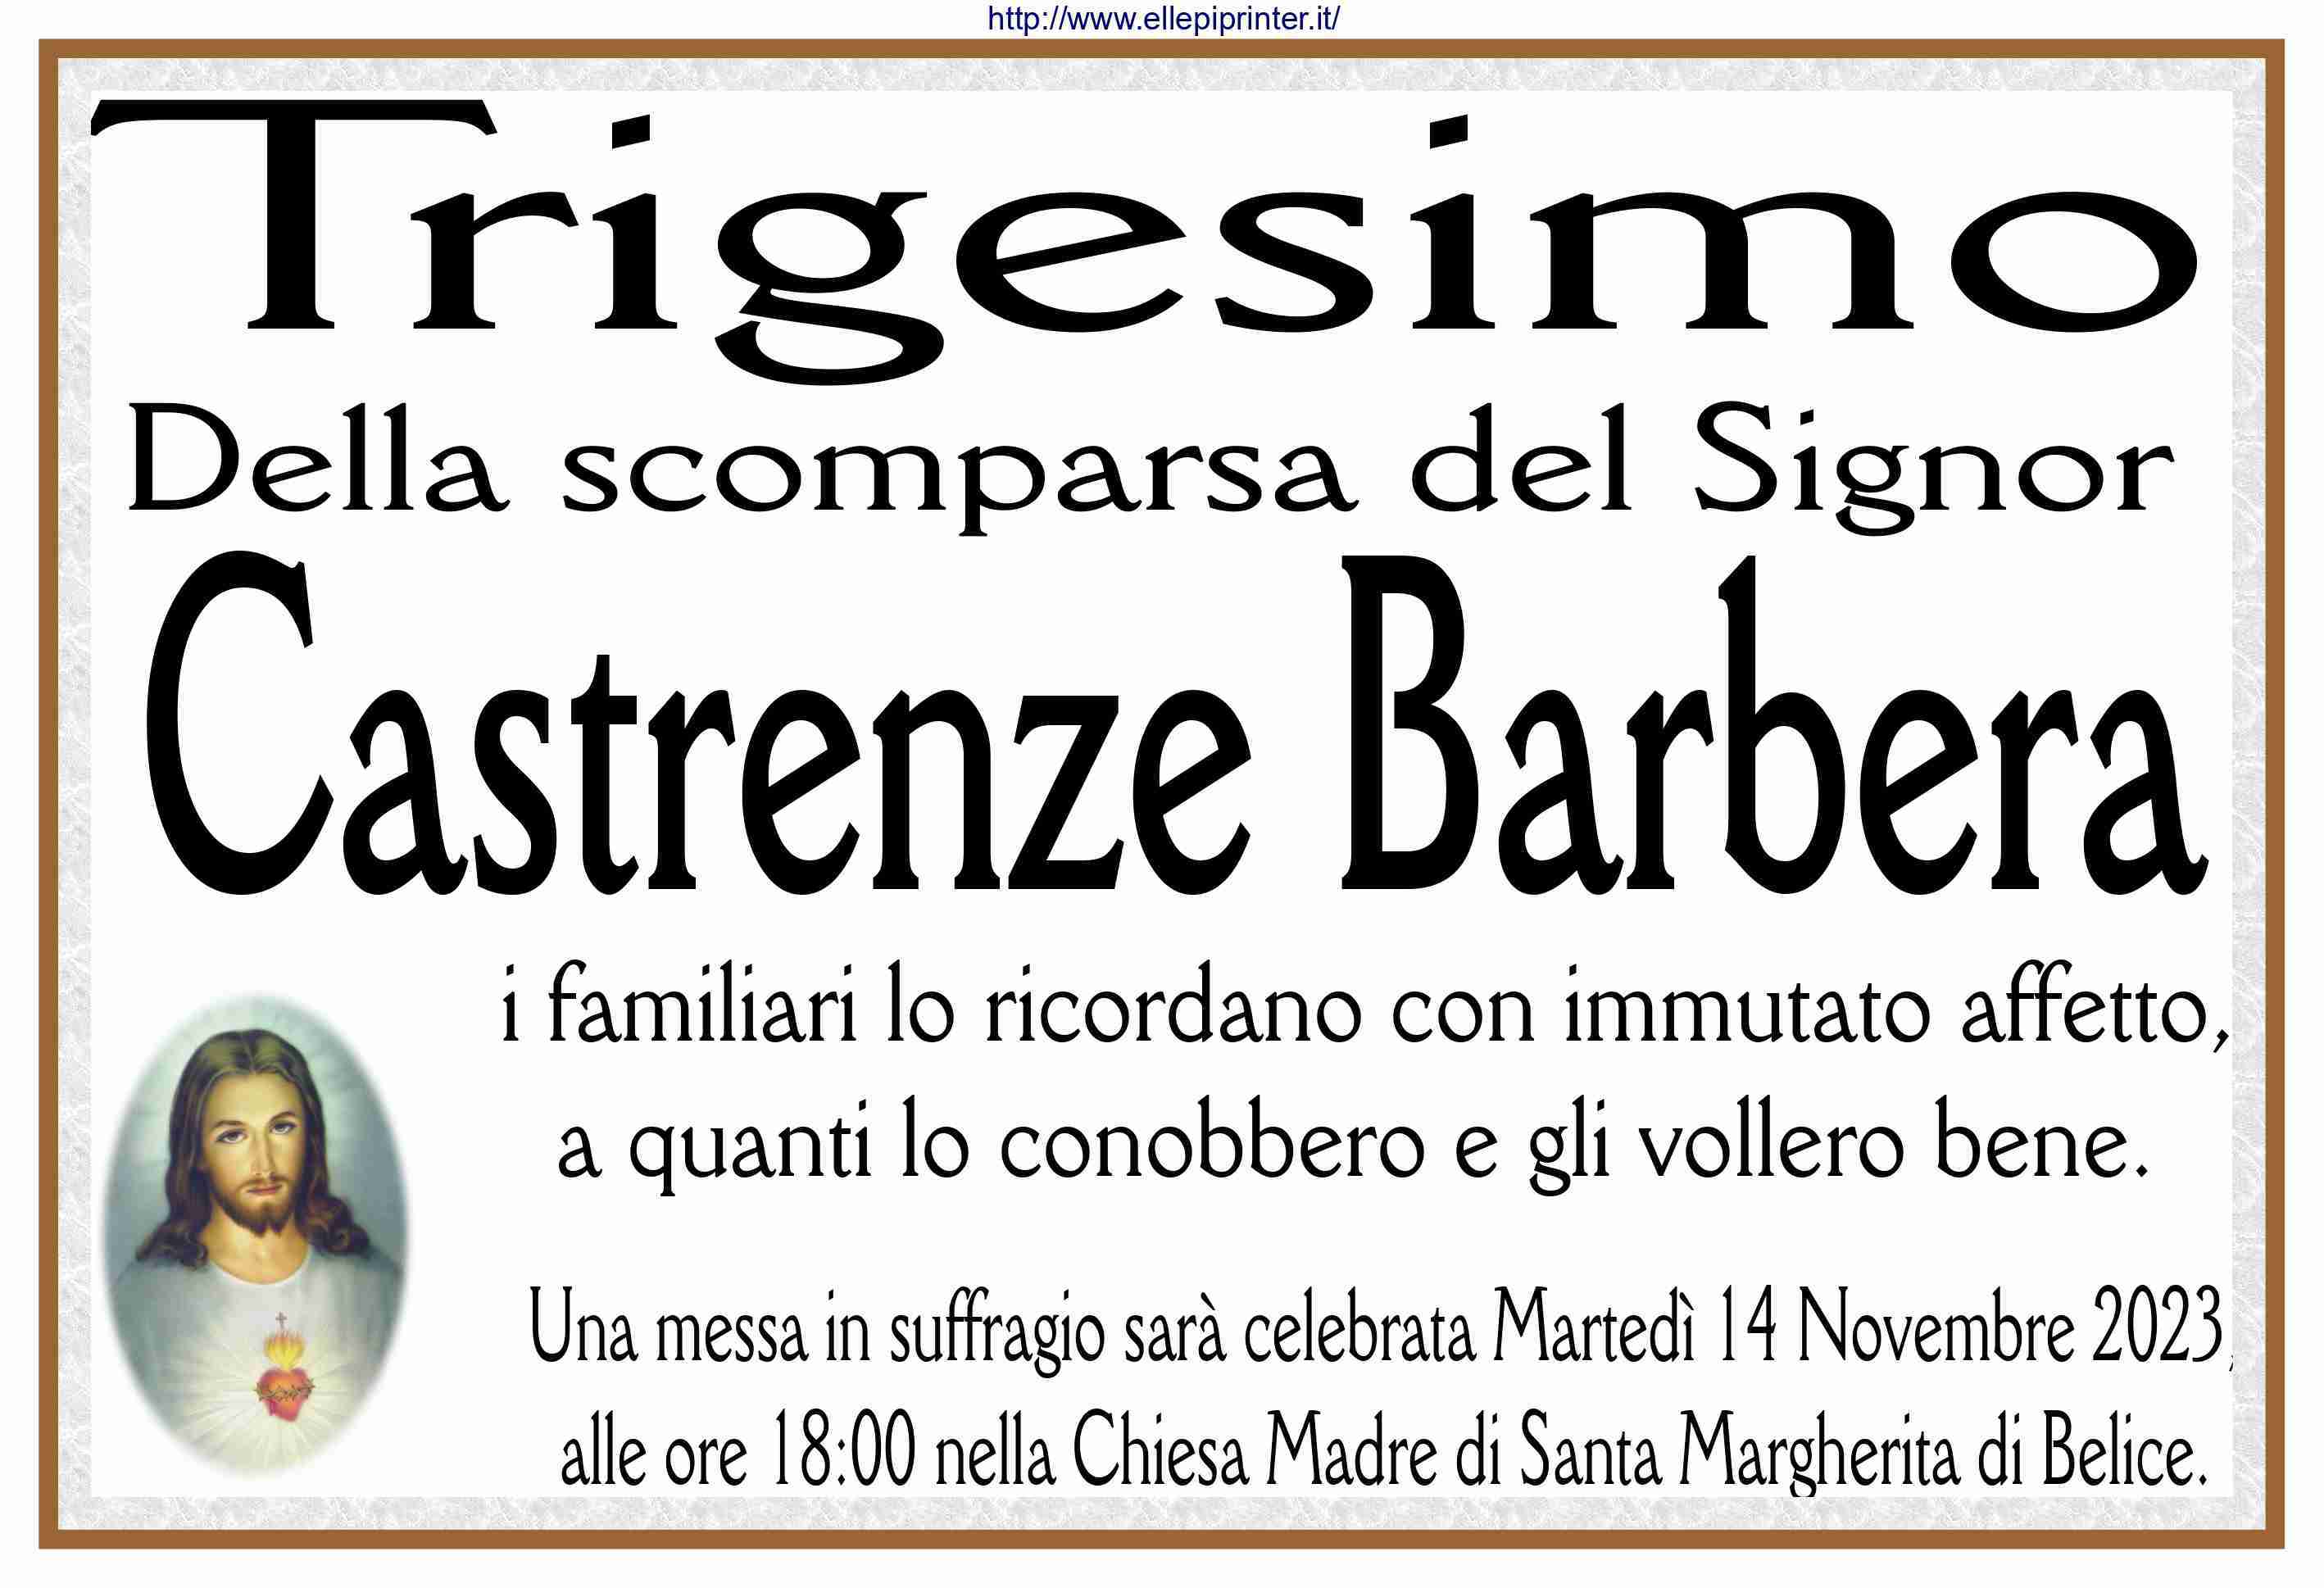 Castrenze Barbera